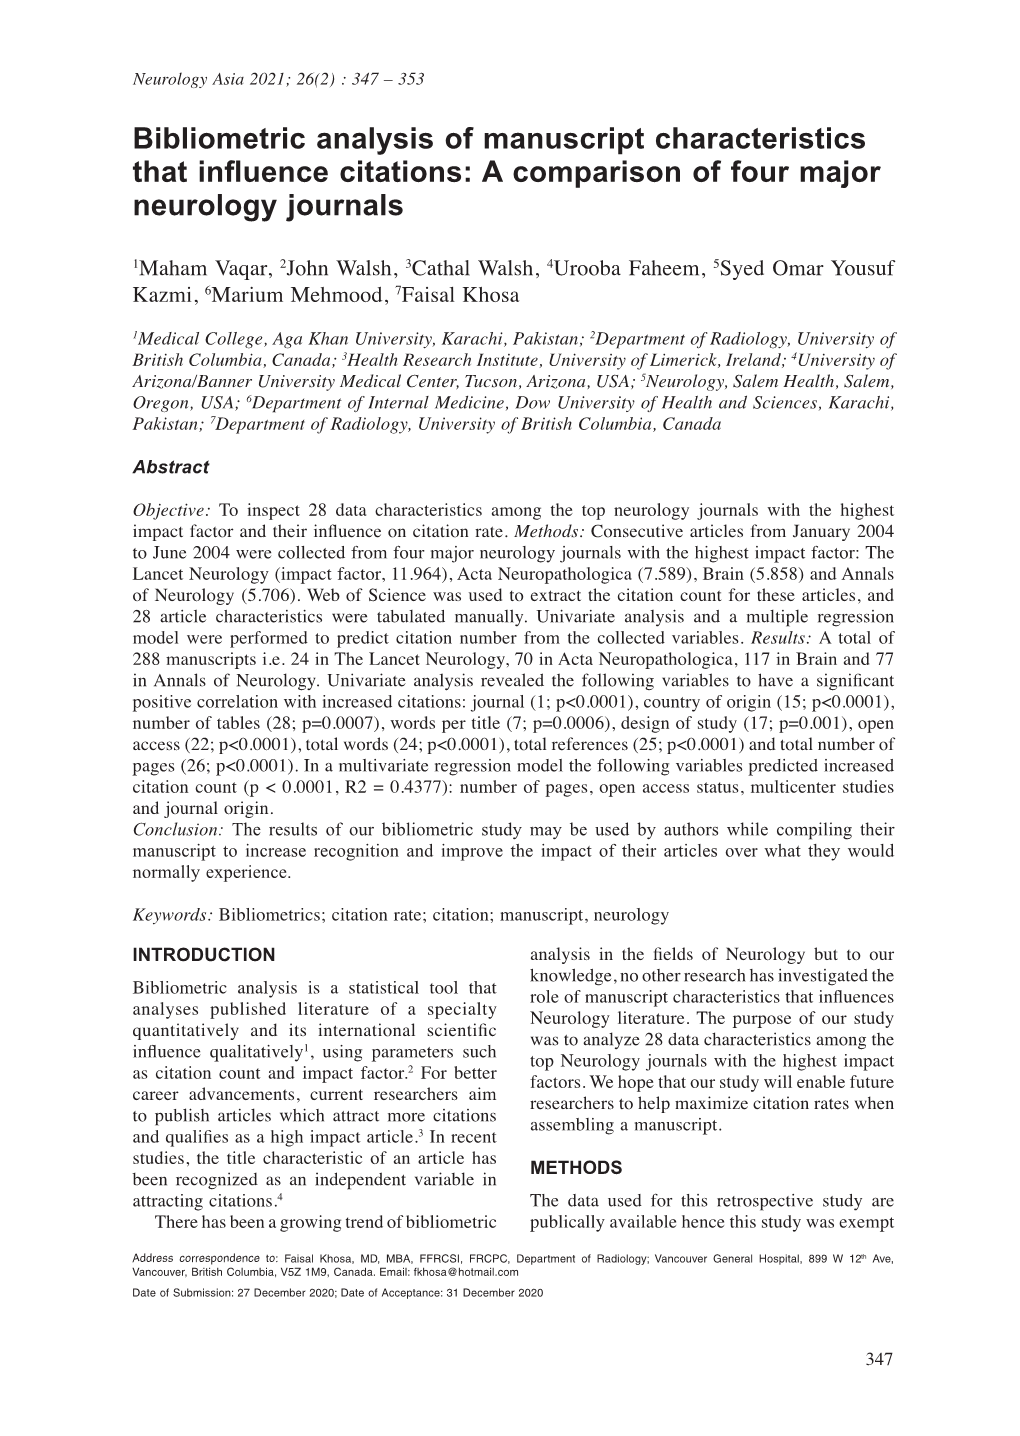 Bibliometric Analysis of Manuscript Characteristics That Influence Citations: a Comparison of Four Major Neurology Journals